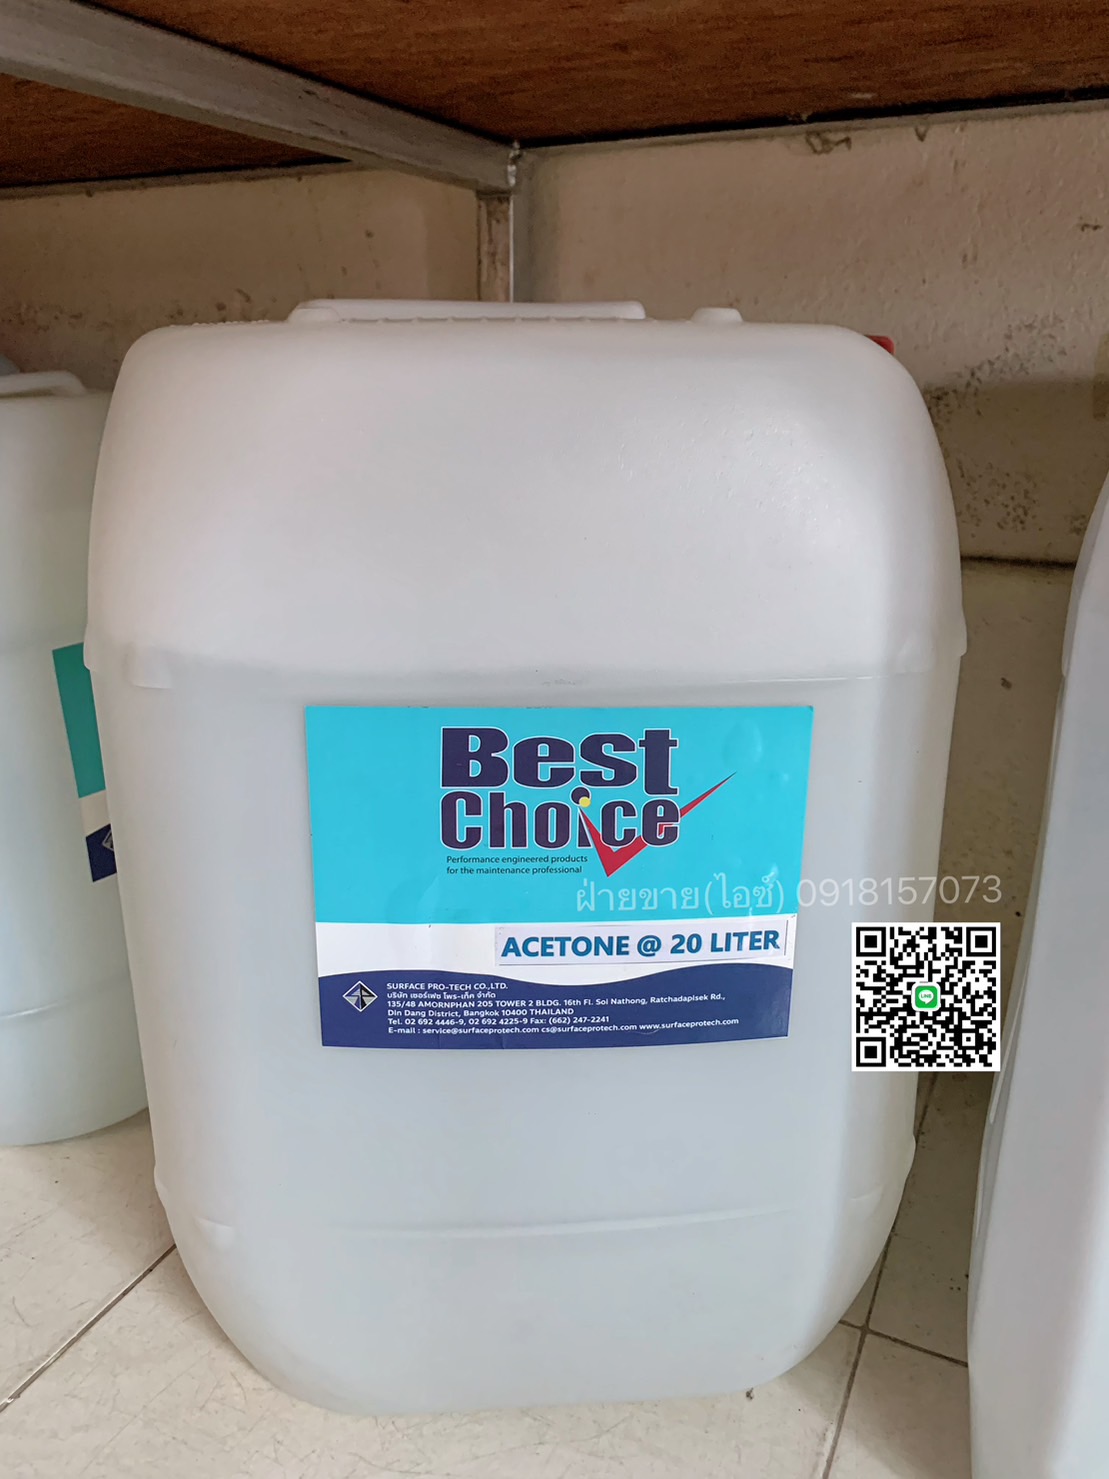 Best Choice Acetone น้ำยาอะซิโทน ล้างเครื่องมือ ล้างคราบสี ล้างน้ำมัน เป็นสารตัวทำละลายอินทรีย์ระเหยง่ายที่ไม่มีกลุ่มฮาโลจีเนตเต็ต>>สอบถามราคาพิเศษได้ที่0918157073ค่ะ<< รูปที่ 1